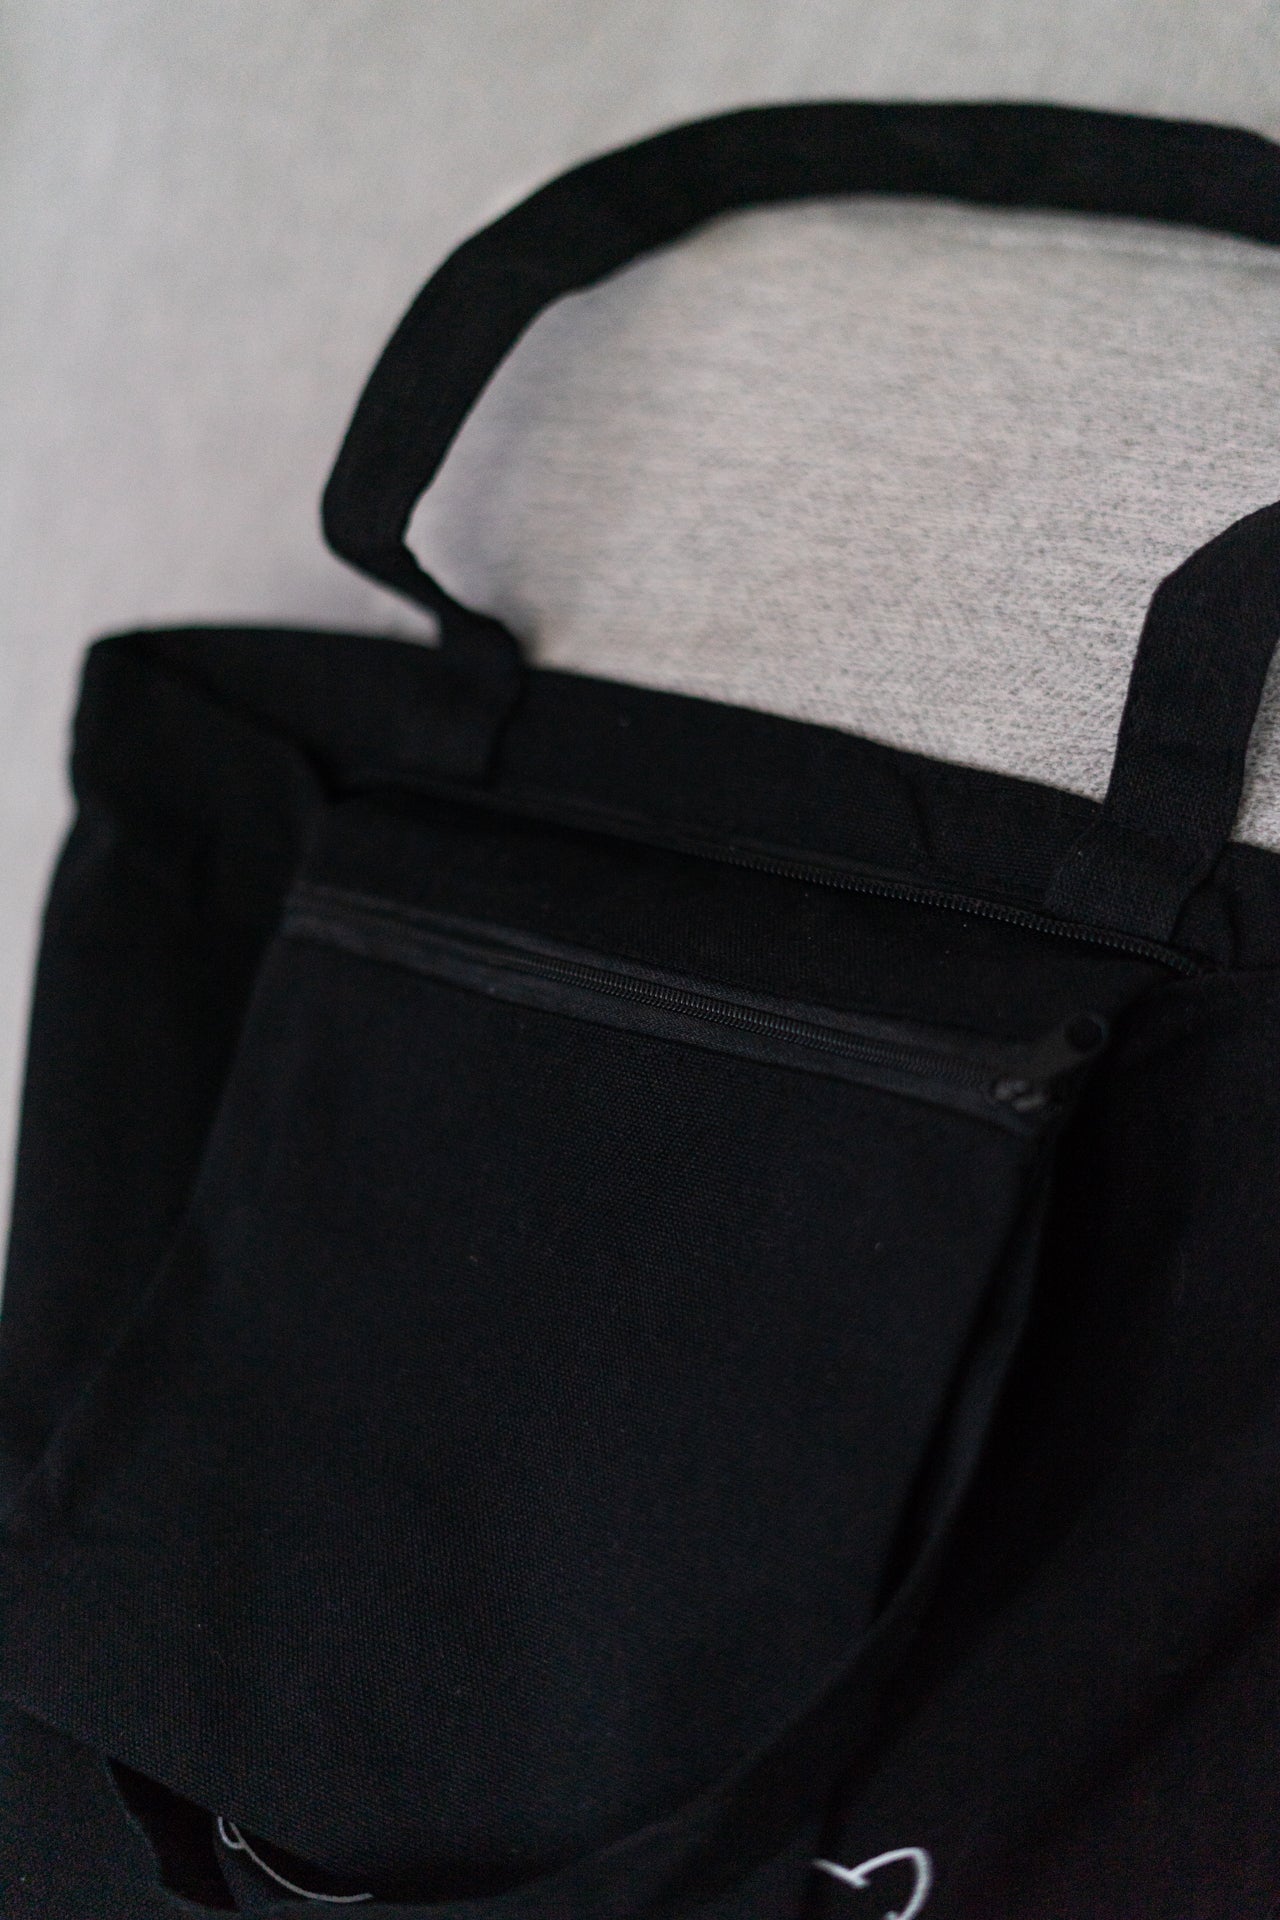 Corgi Zippered Canvas Tote Bag with Pocket